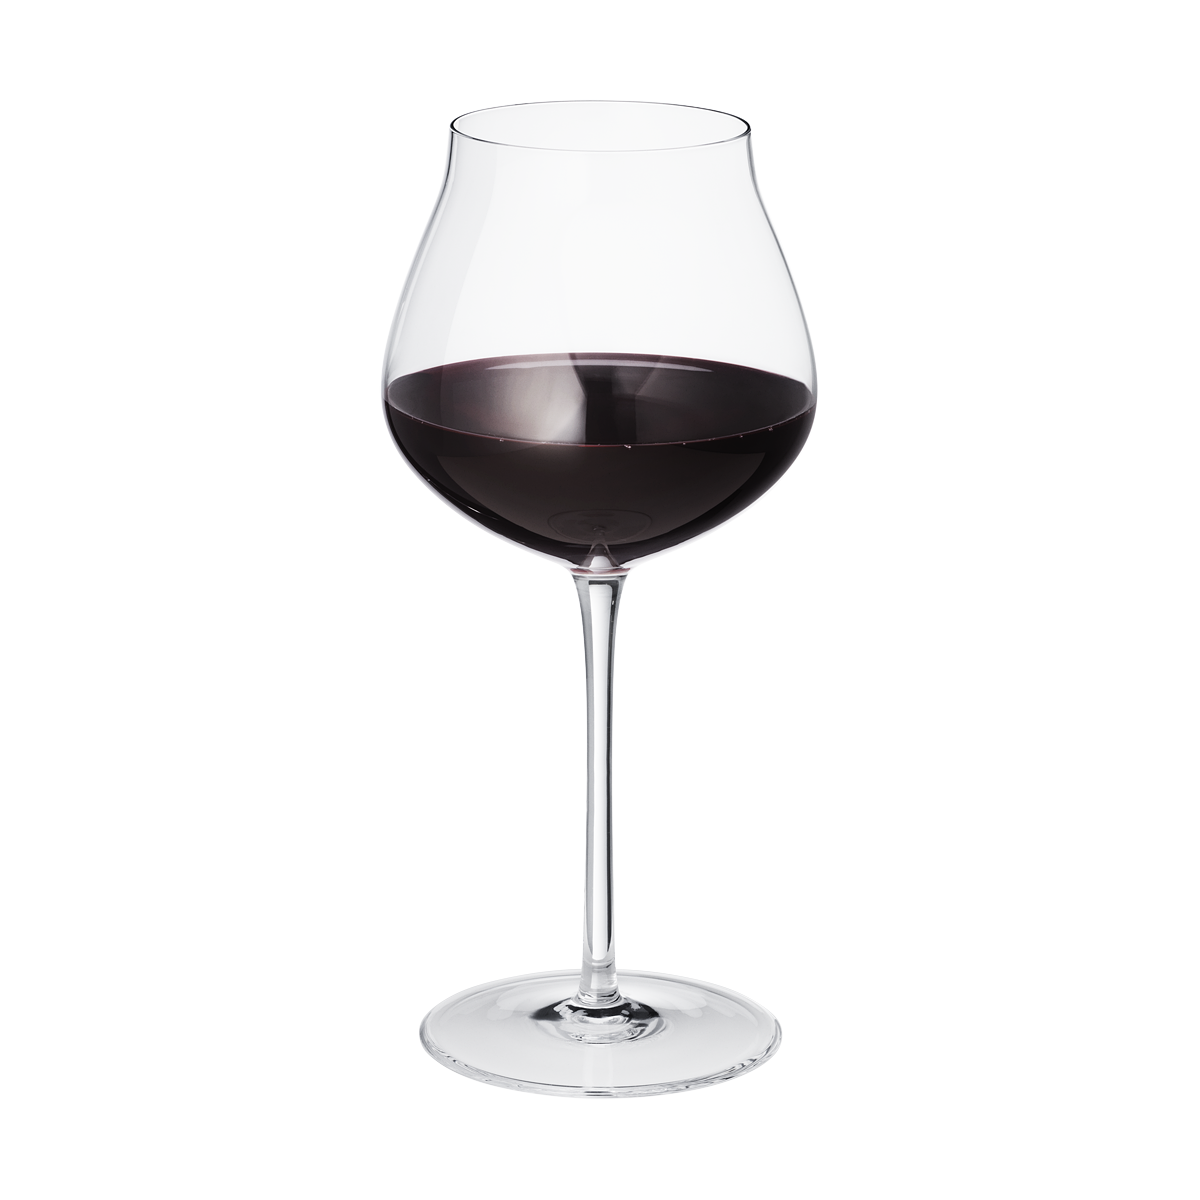 Georg Jensen - SKY red wine glass, 6 pcs. - CRYSTAL GLASS